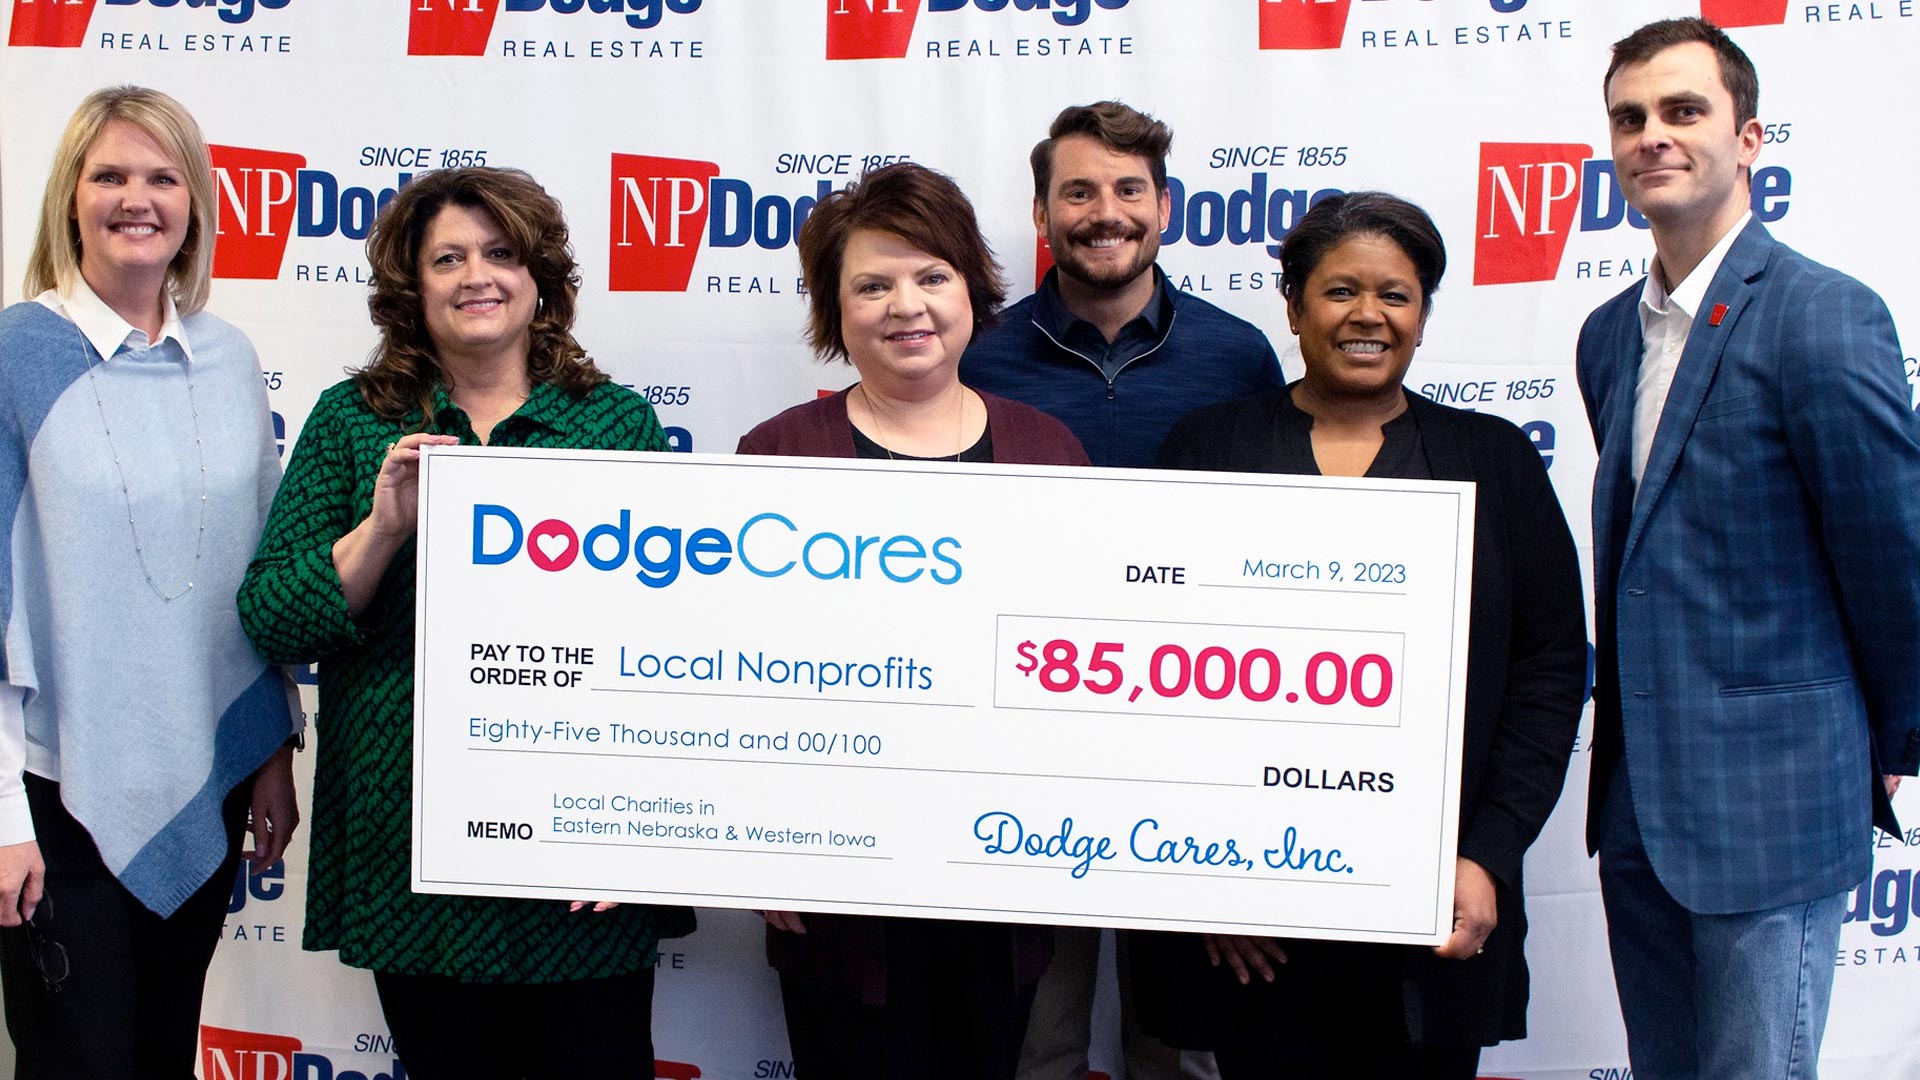 DodgeCares Donates $85,000 to local nonprofits